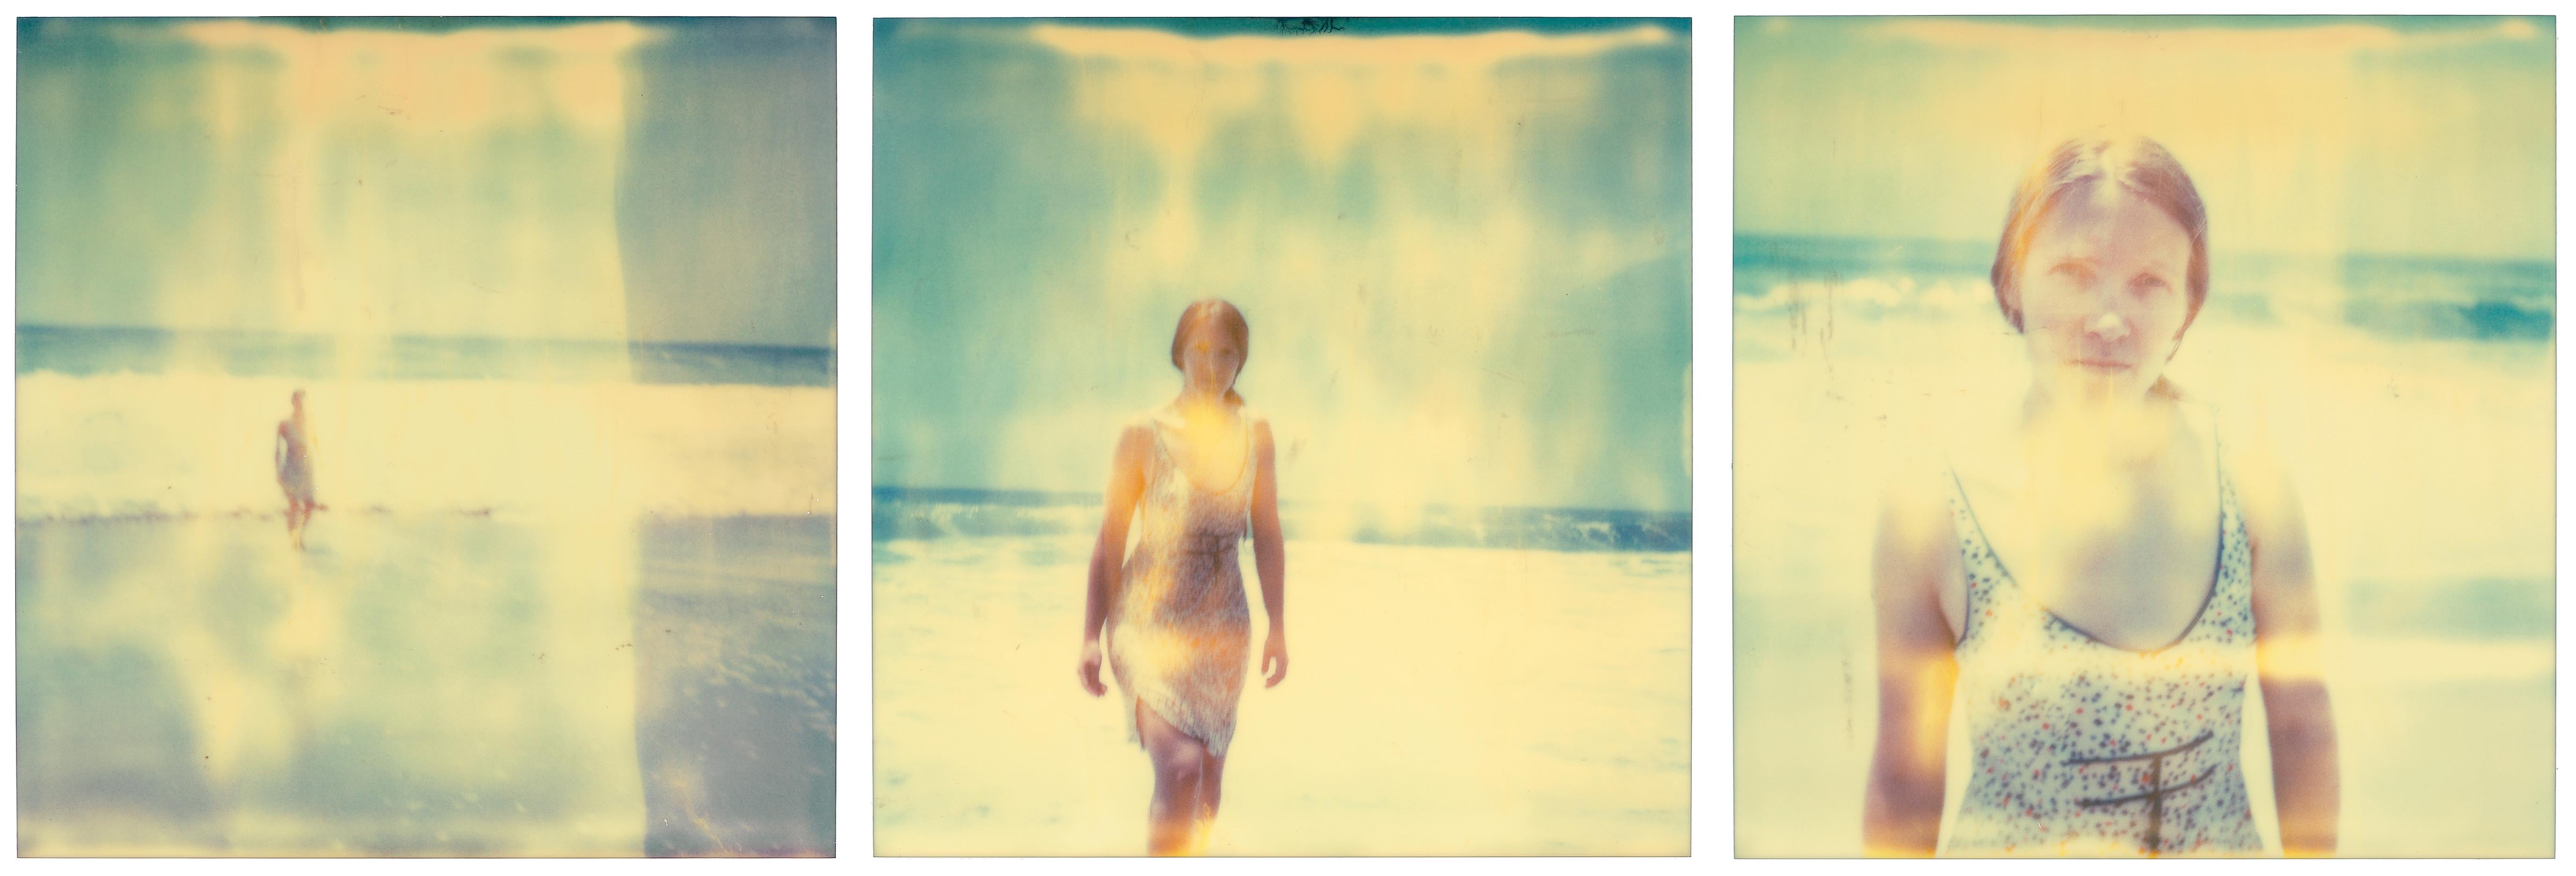 Woman in Malibu - Polaroid, analog, 21st Century, Woman - Photograph by Stefanie Schneider